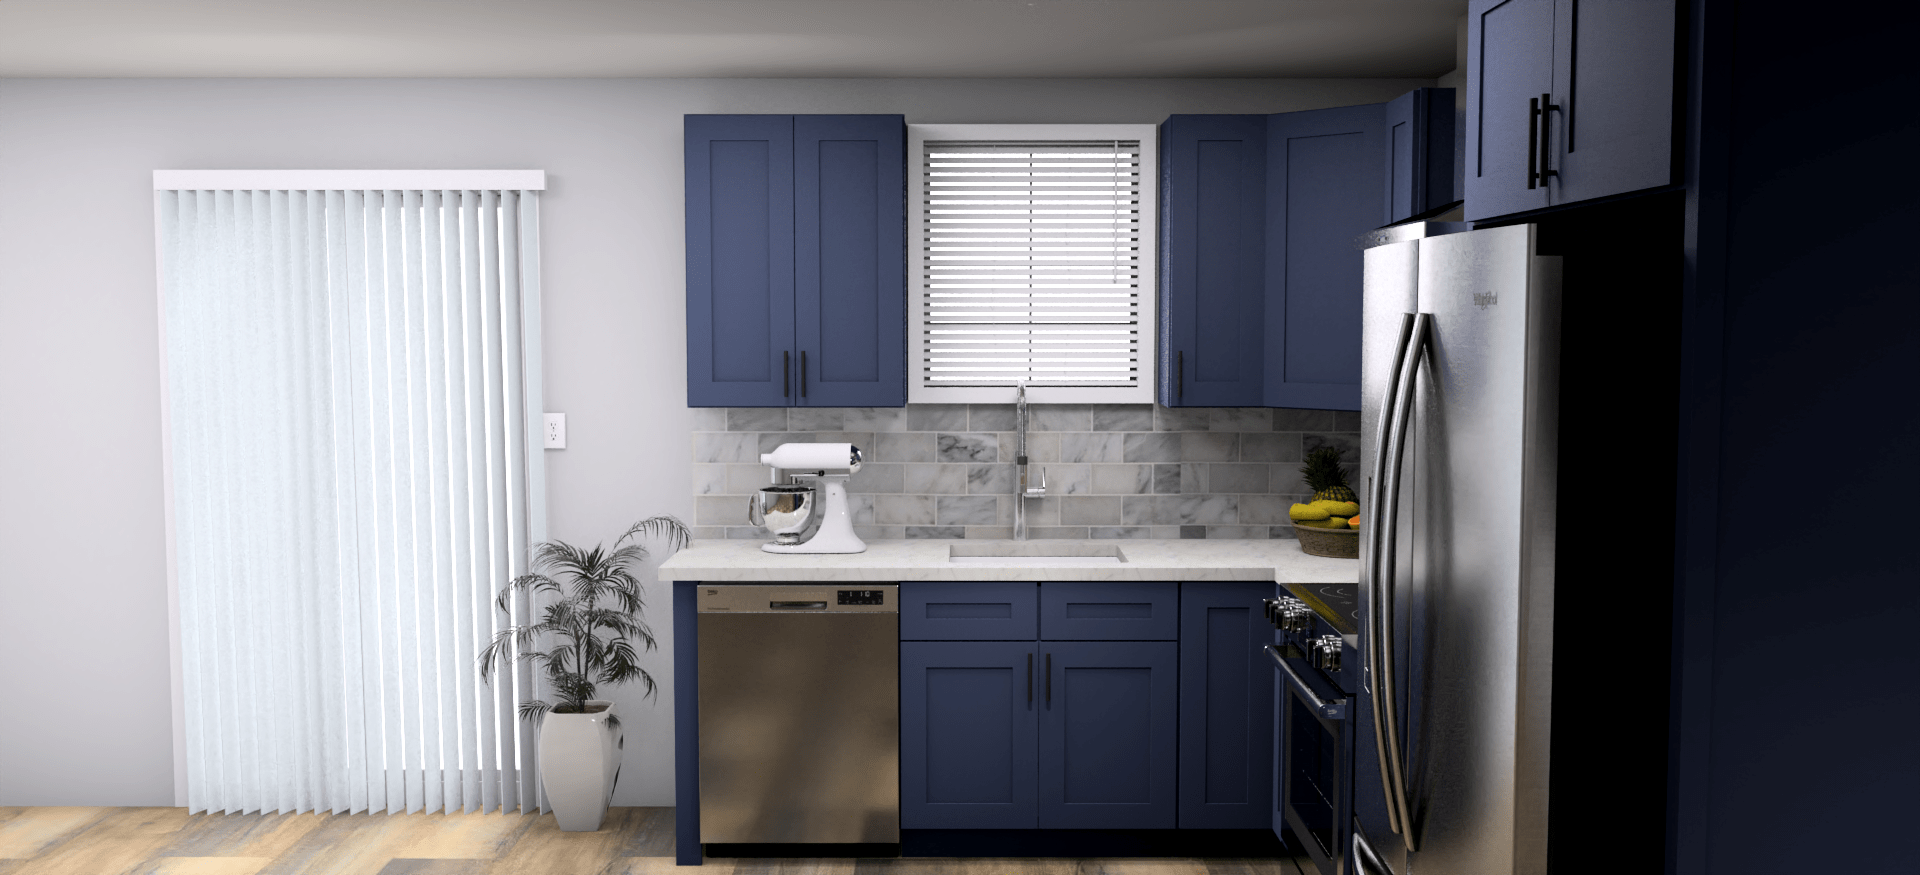 LessCare Danbury Blue 8 x 11 L Shaped Kitchen Side Layout Photo